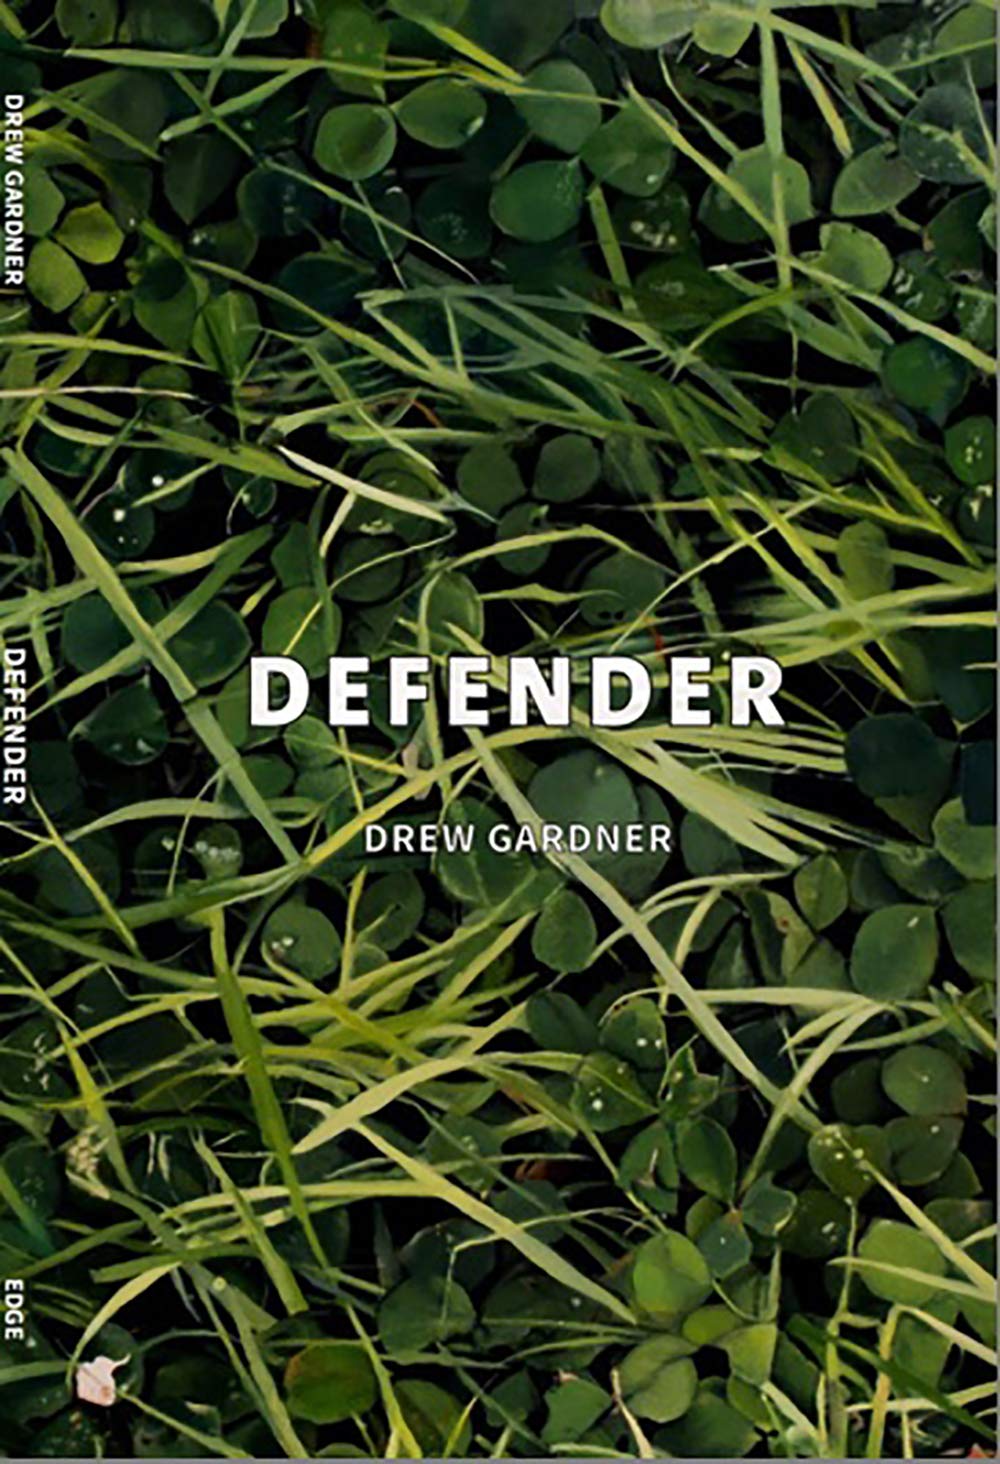 Defender, by Drew Gardner